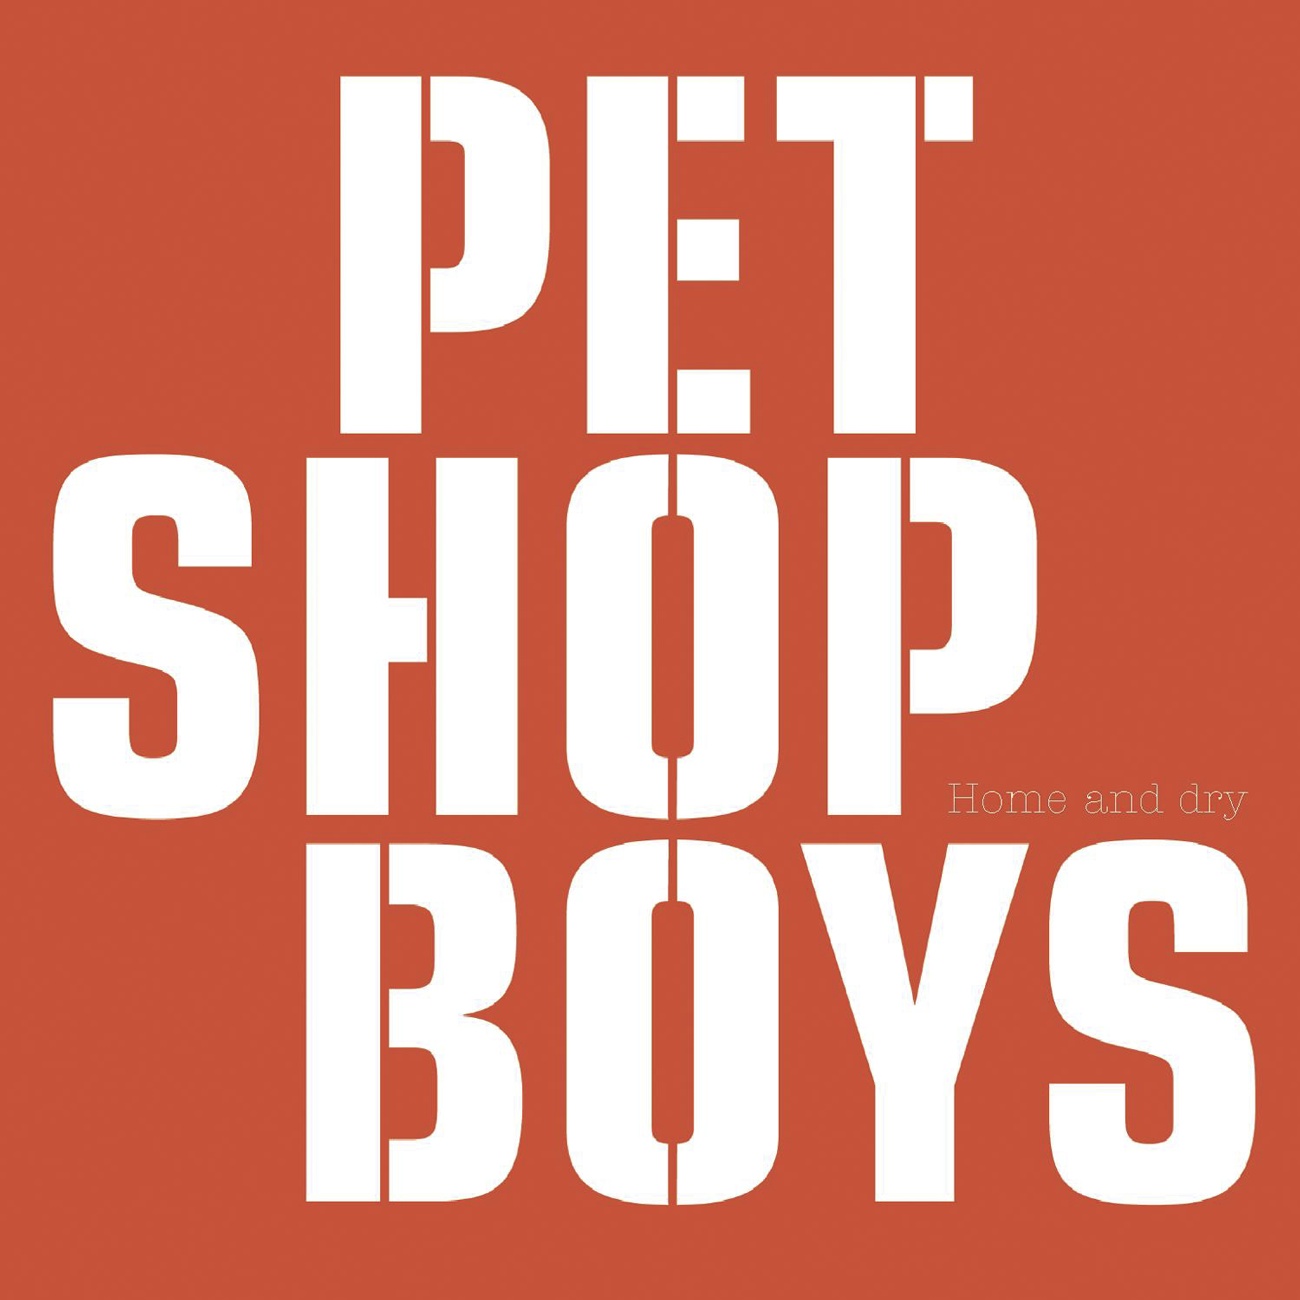 Pet shop boys текст. Pet shop boys обложки альбомов. Pet shop boys обложка. Pet shop boys логотип. Pet shop boys Home and Dry.